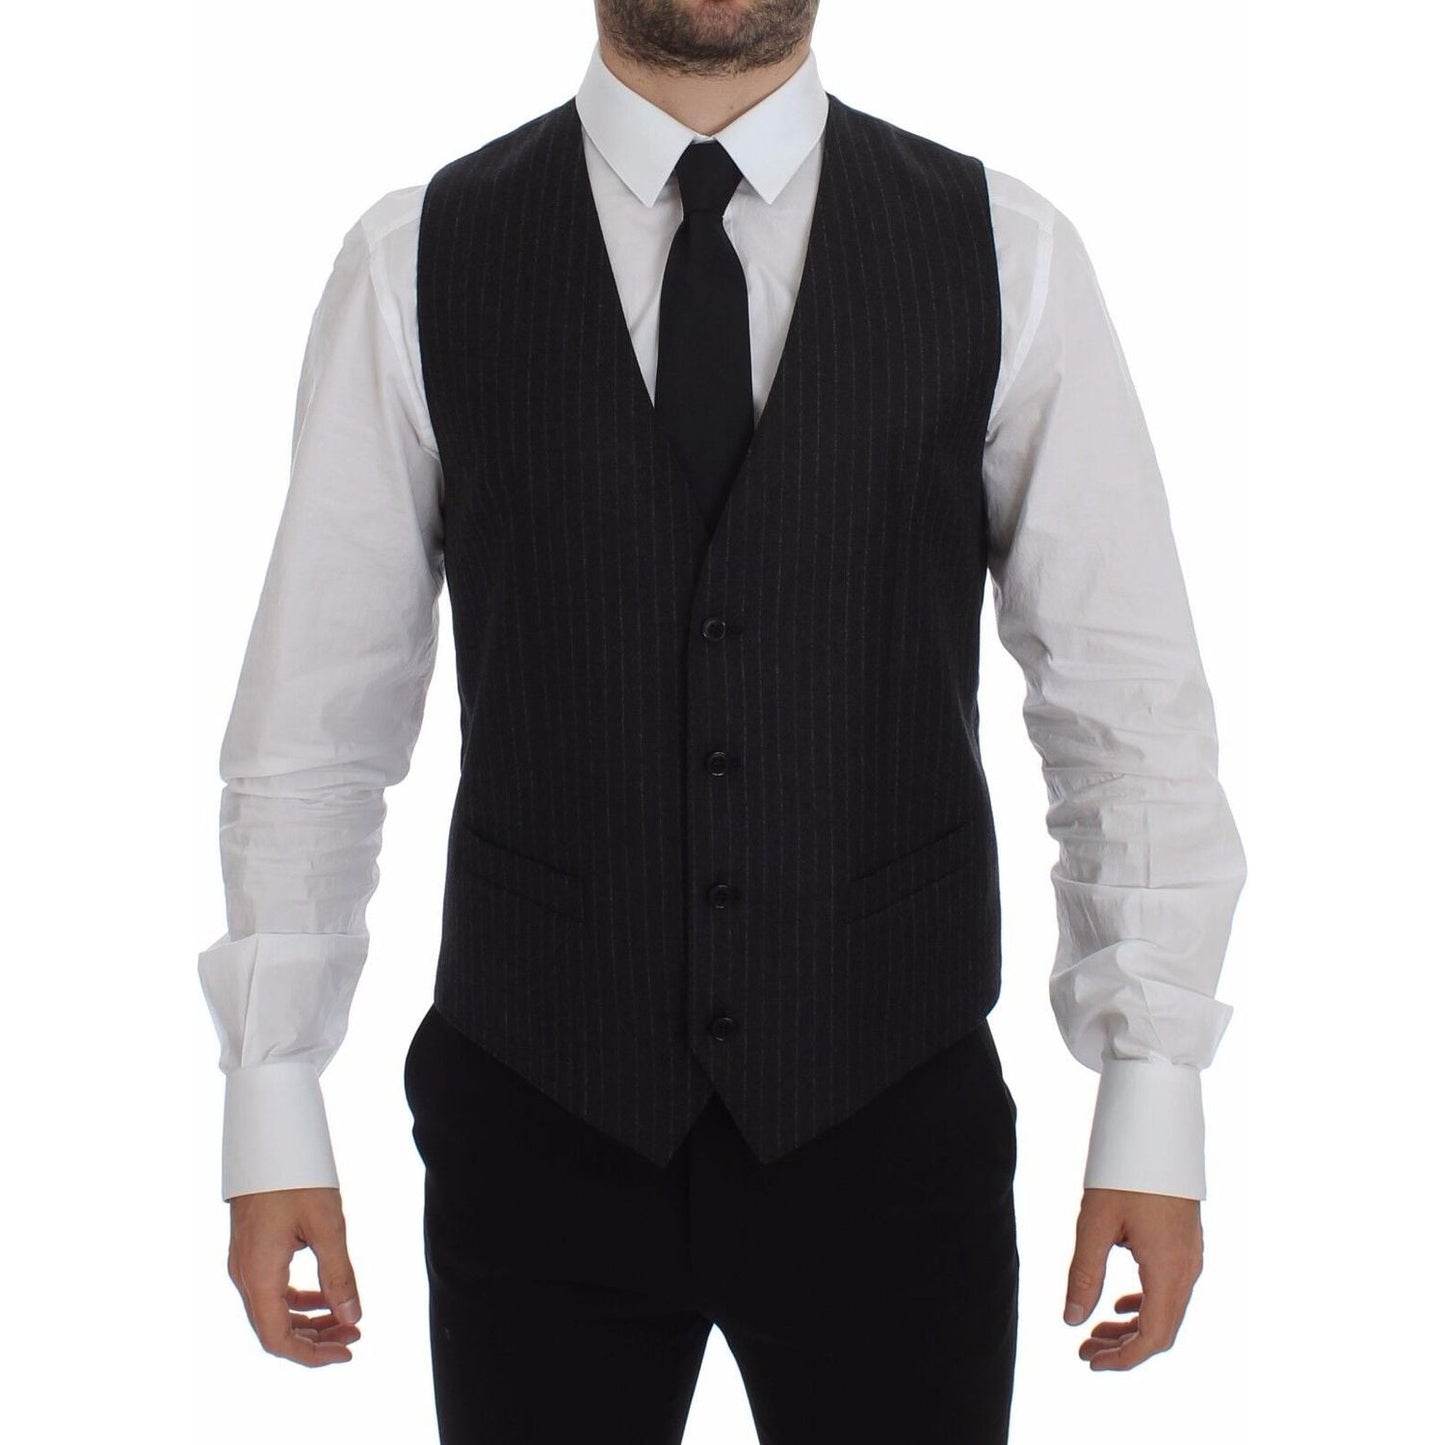 Dolce & Gabbana Elegant Gray Striped Wool Dress Vest gray-striped-wool-logo-vest-gilet-vests